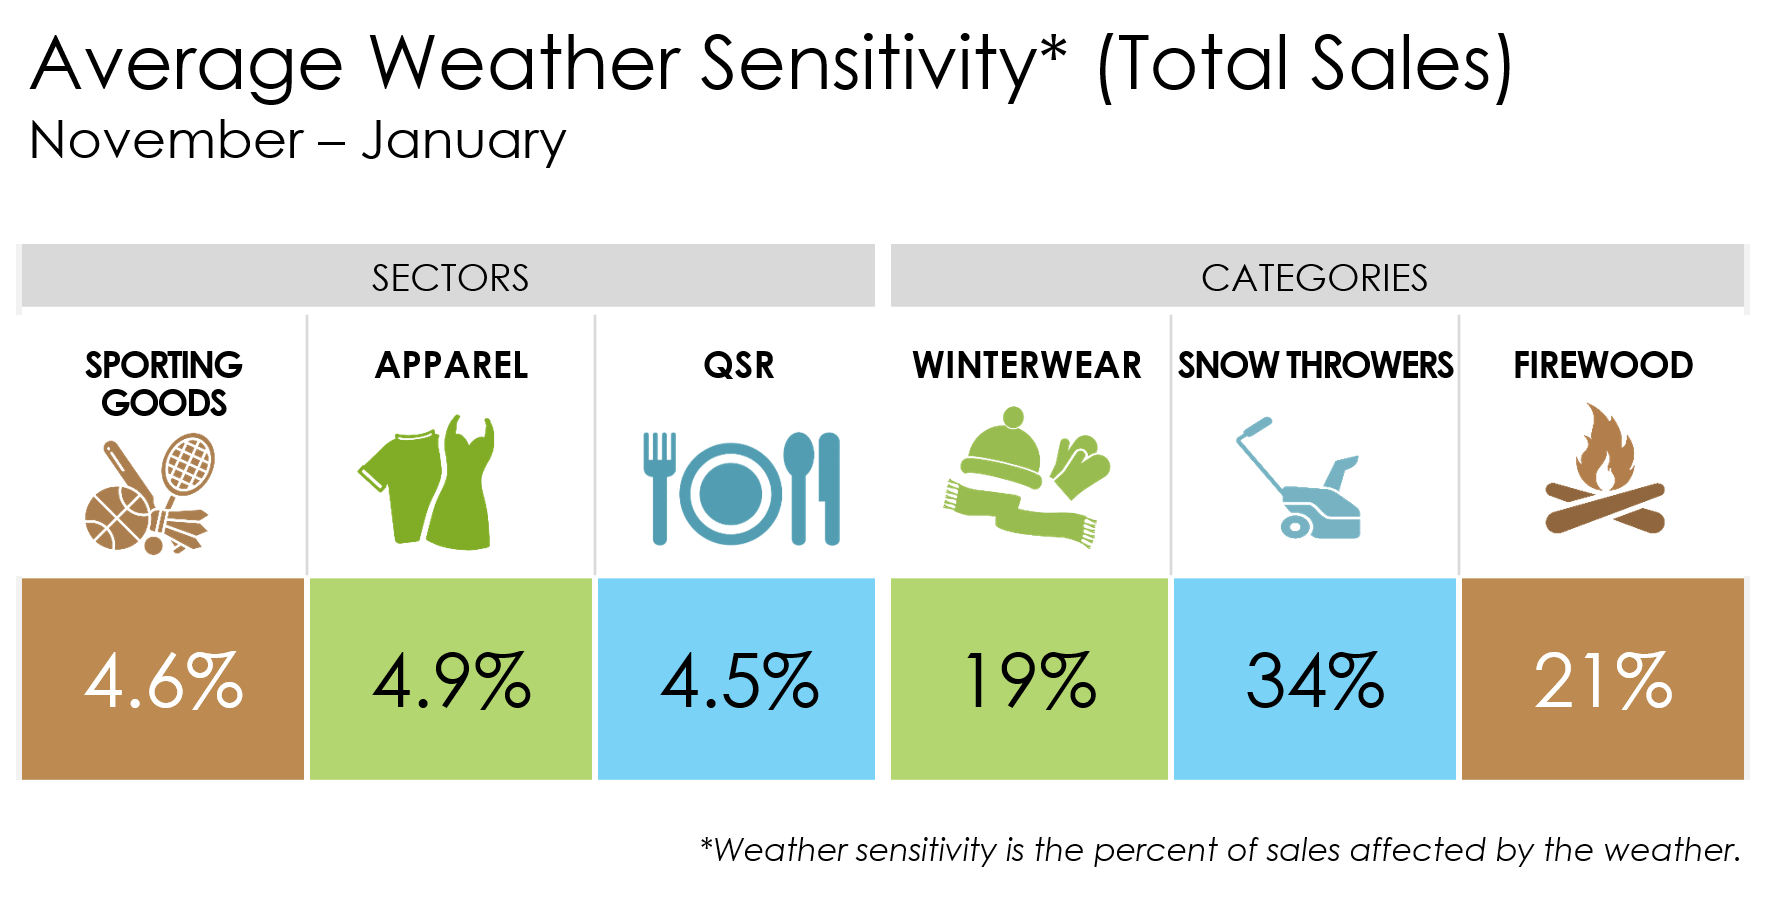 Q4 Weather Sensitivity